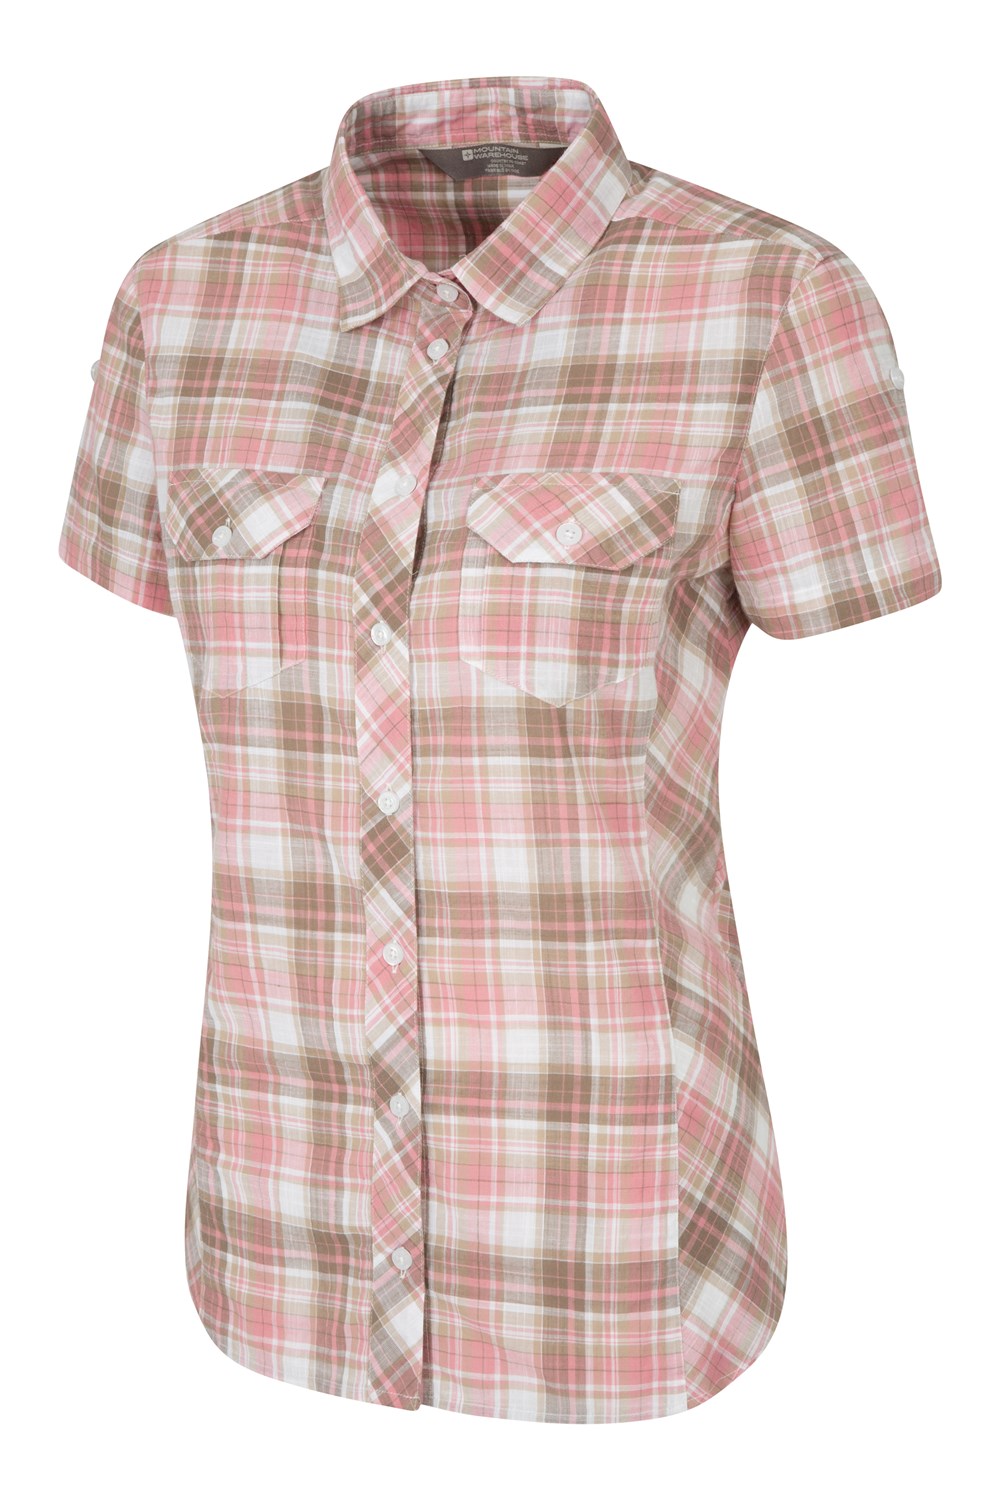 Mountain Warehouse Holiday Womens Cotton Shirt | eBay